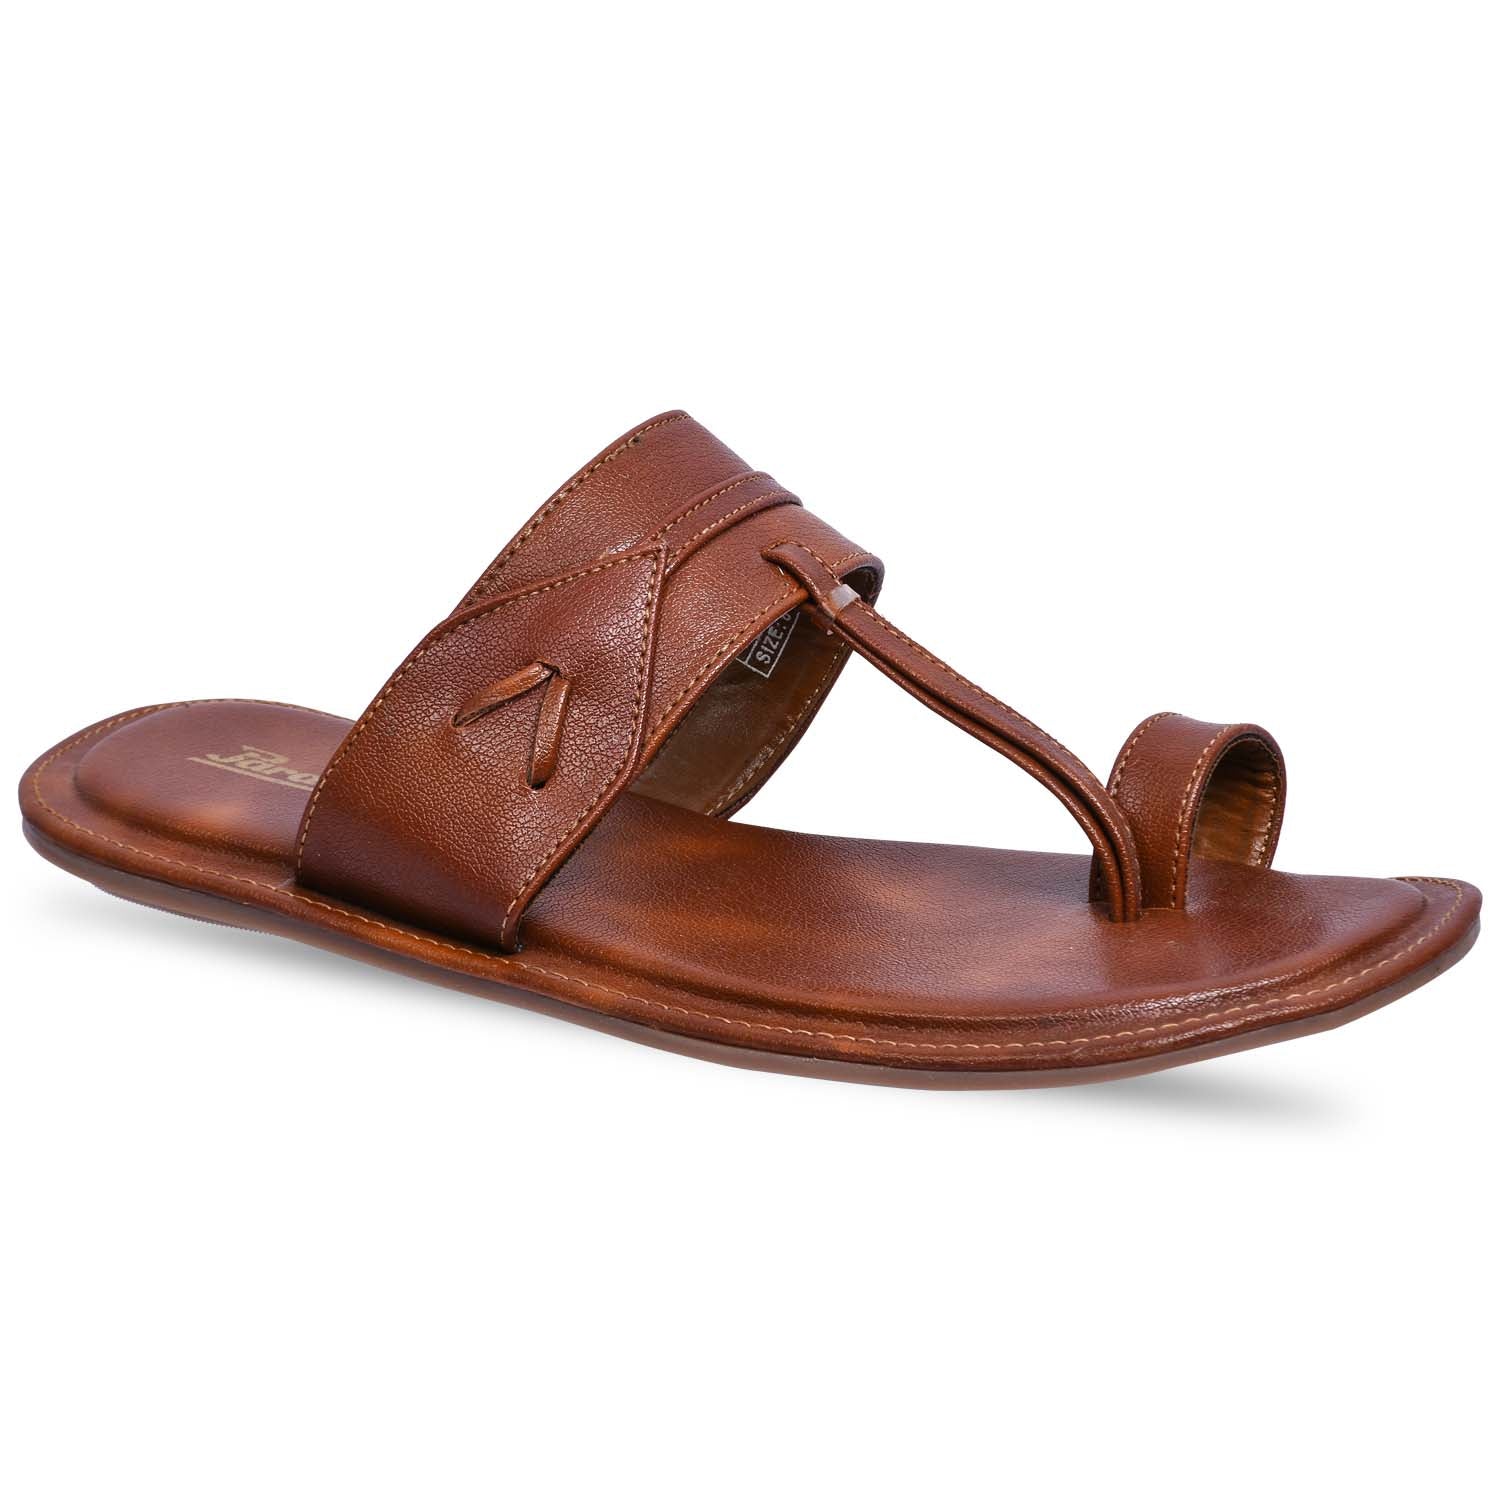 Xappeal Womens Coachella Flat Sandal Shoes, Tan, US 8 - Walmart.com